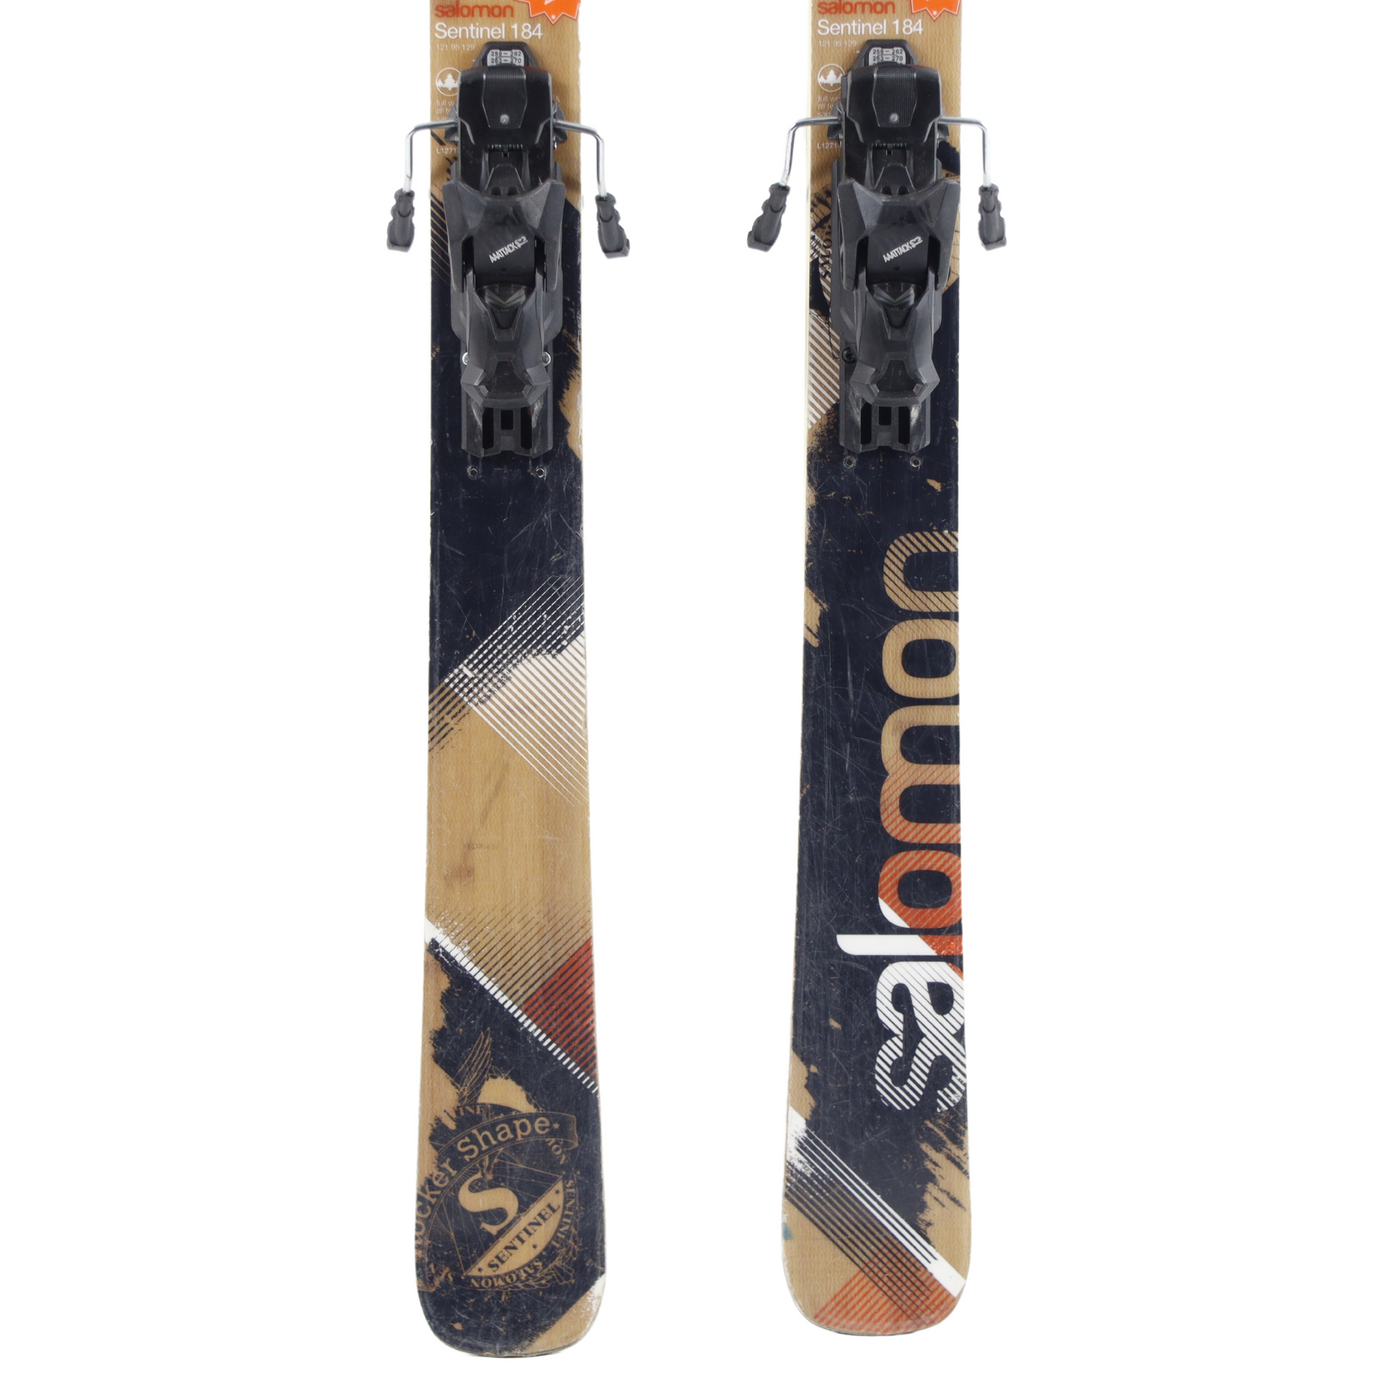 Salomon Sentinel 95 184cm + Tyrolia Attack 13 Bindings 2012 - USED Skis Salomon   